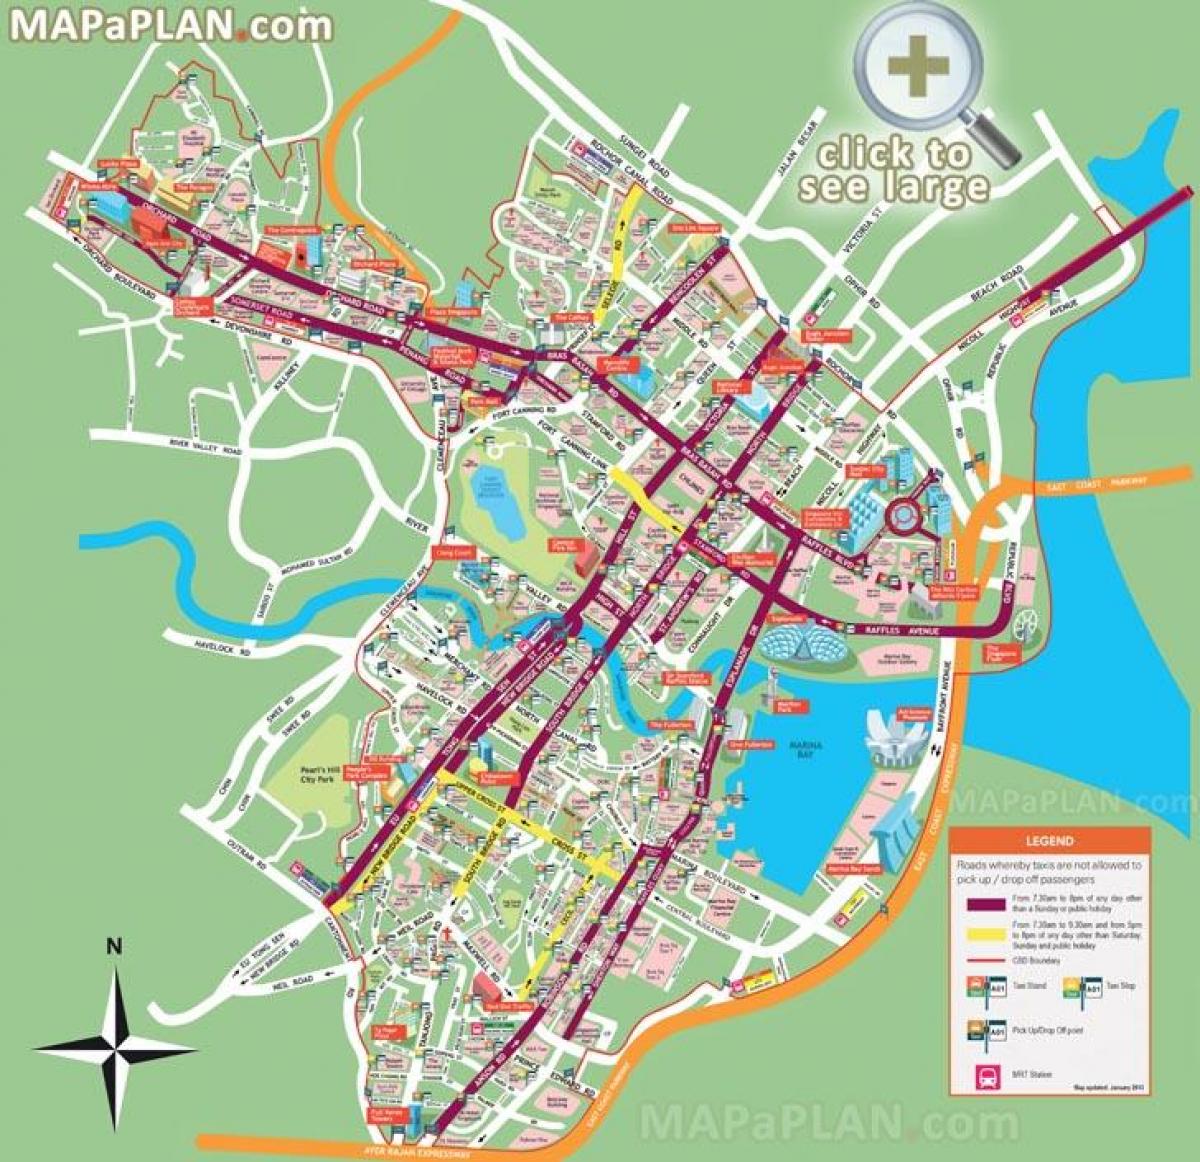 Singapore turiststeder kart